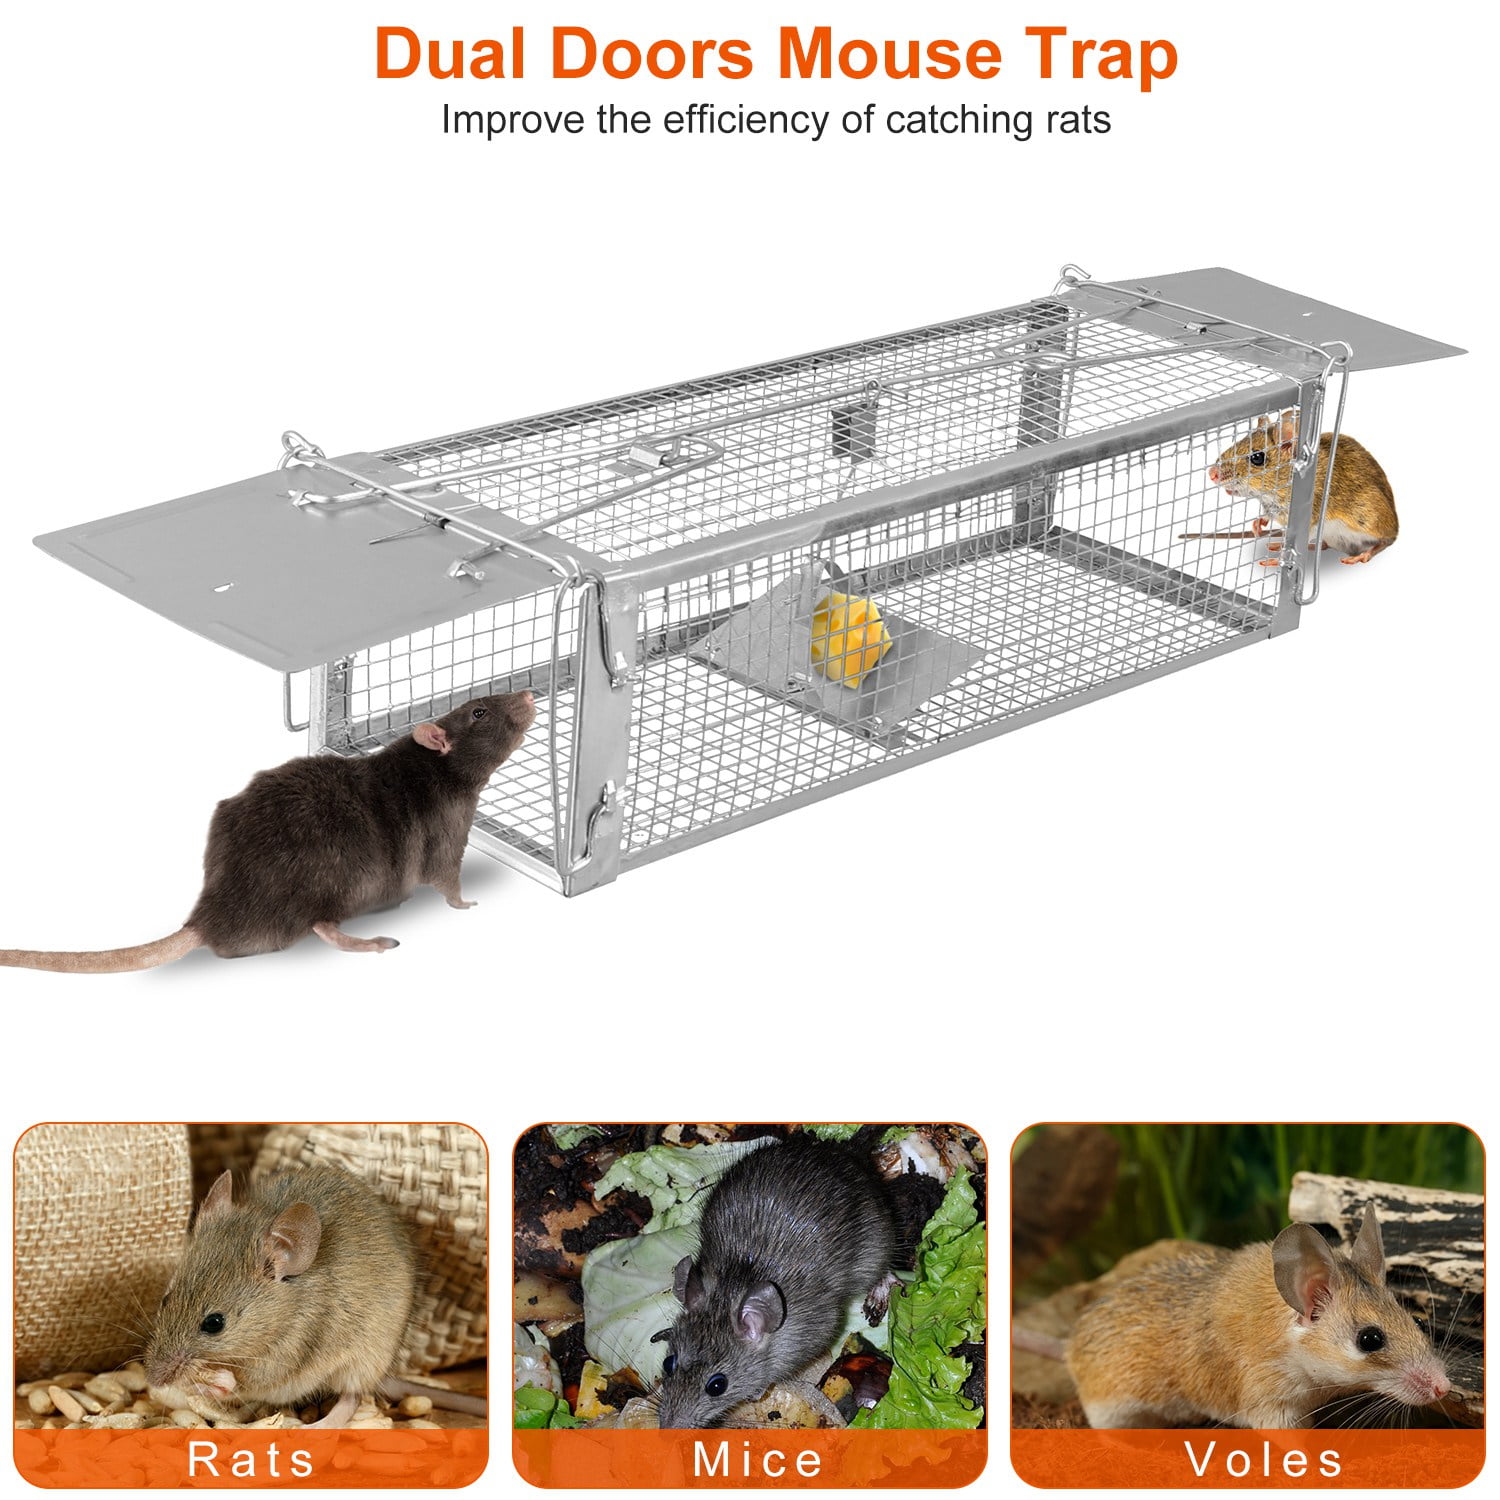 Rat trap cage with wooden floor, 27.5x9.5x10cm, Rat control, Pest control